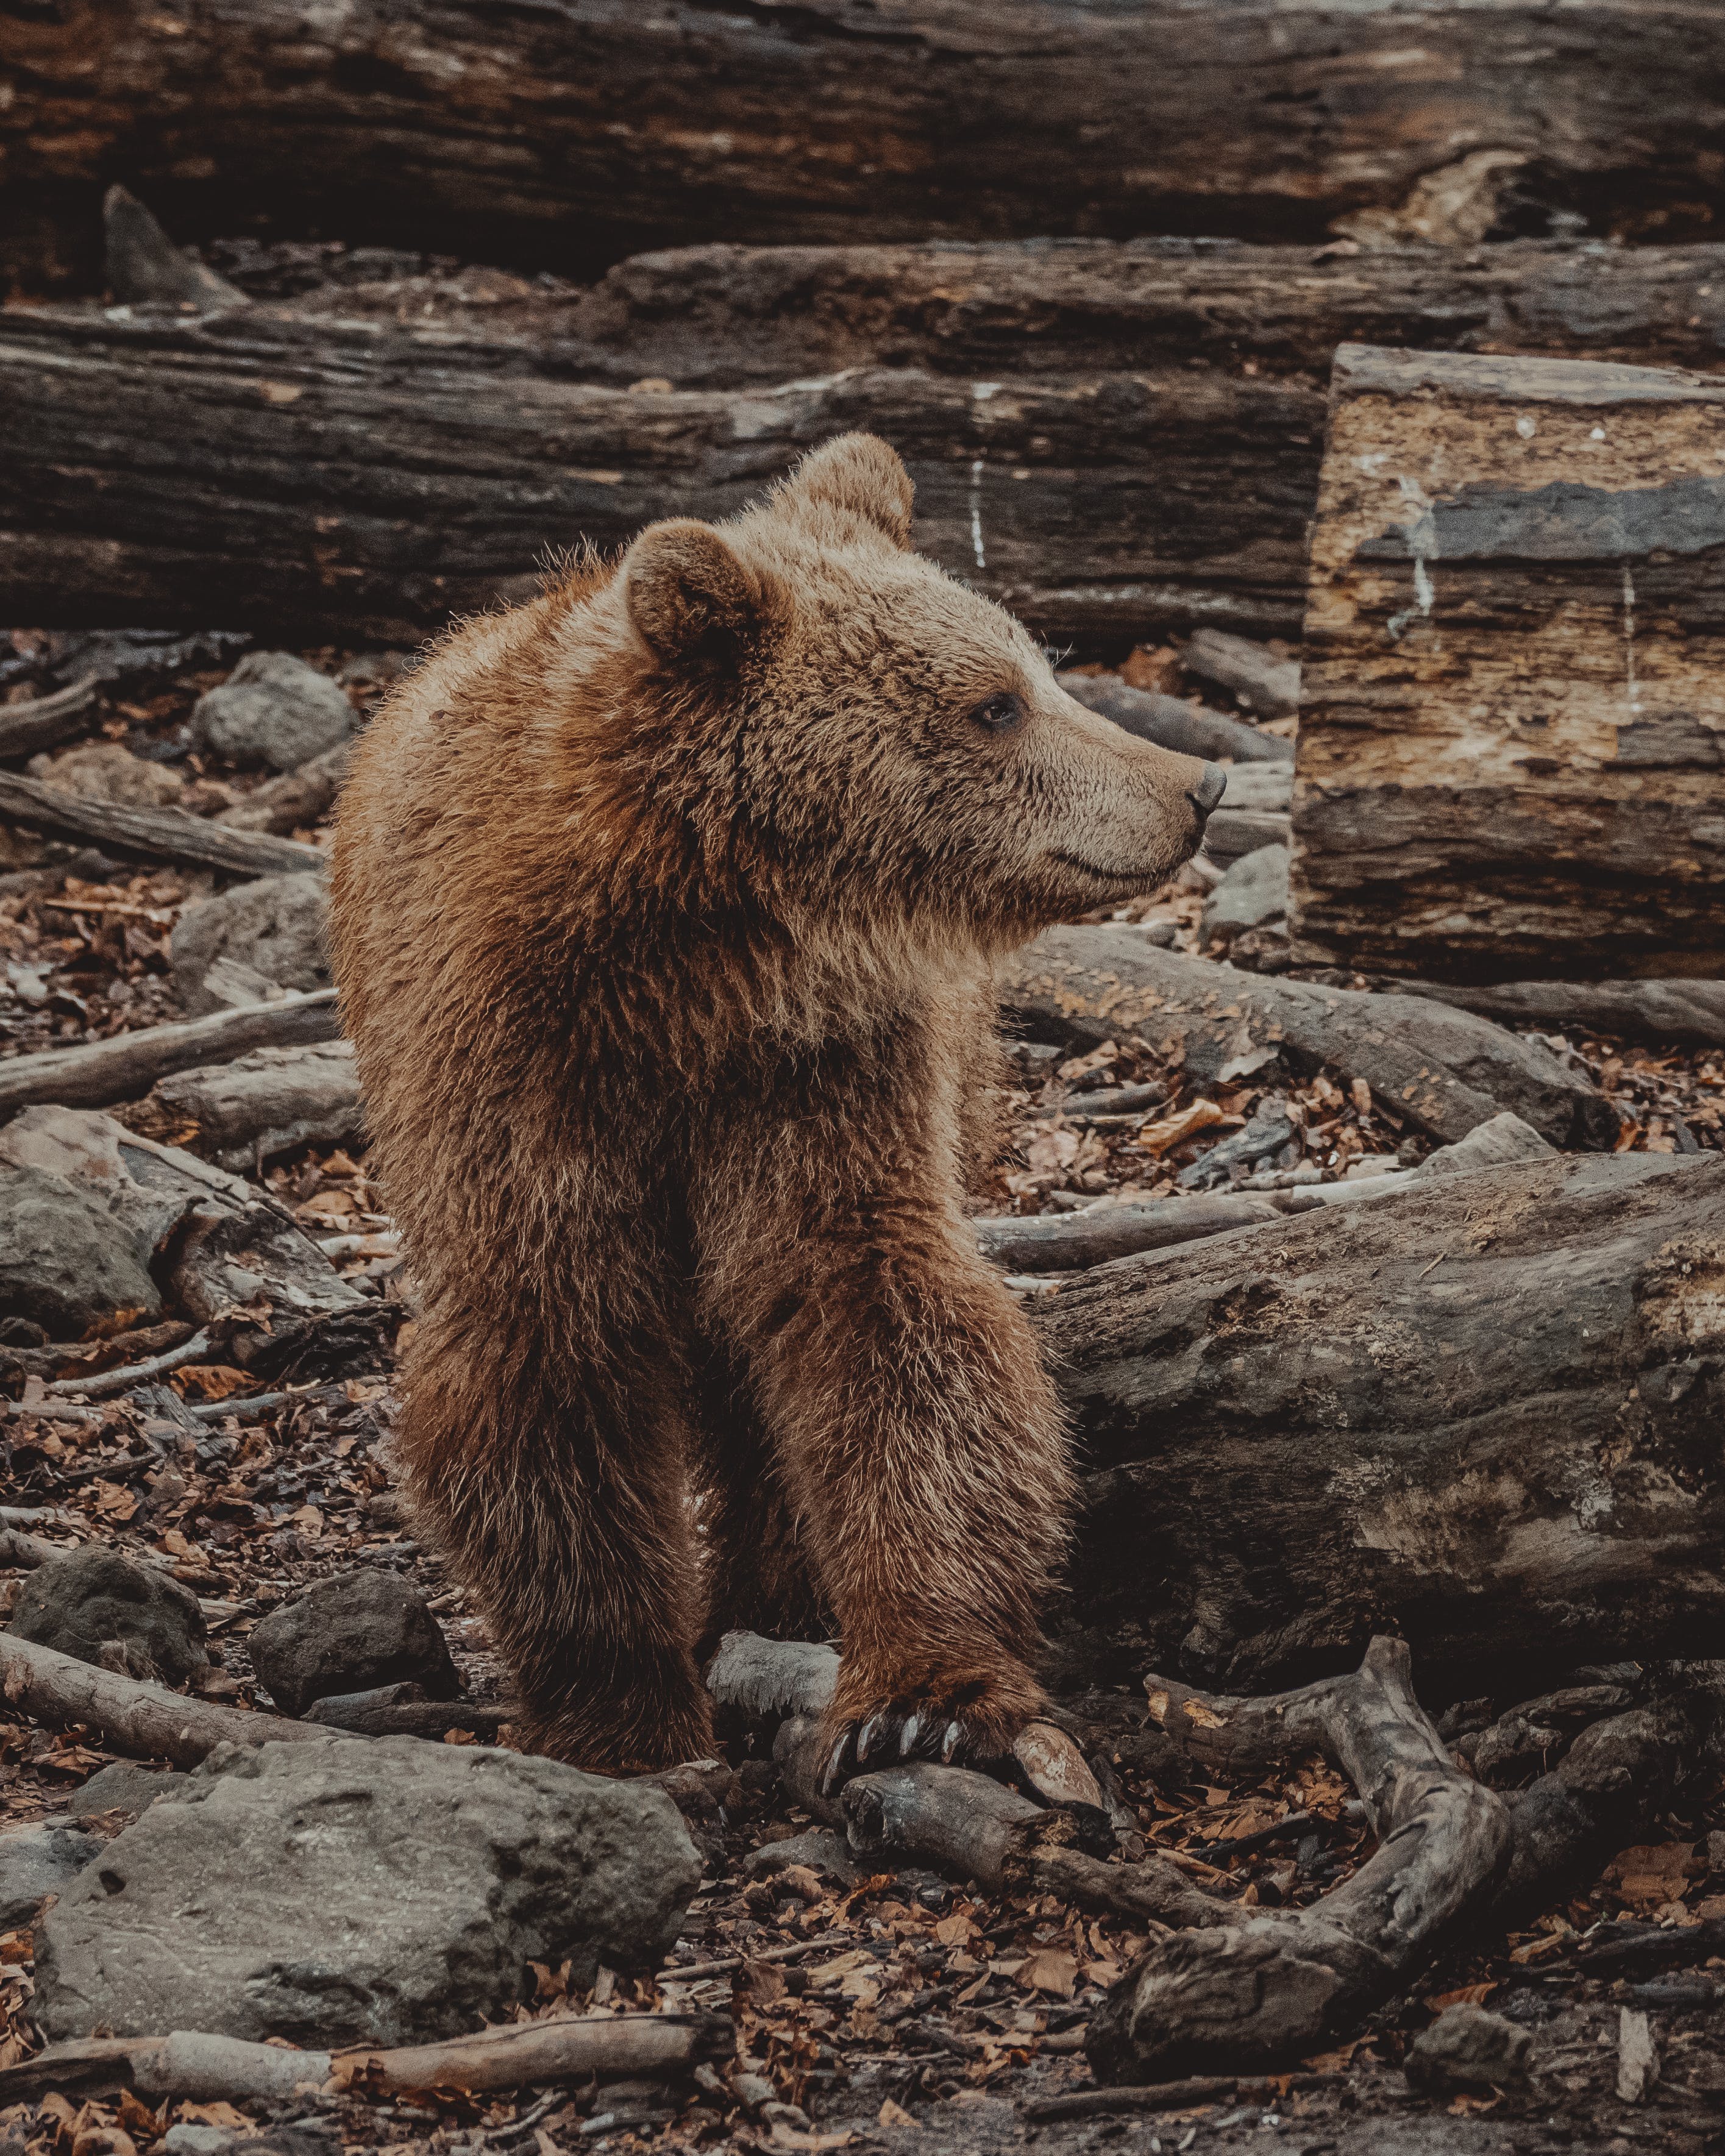 A bear walking. | Source: Pexels